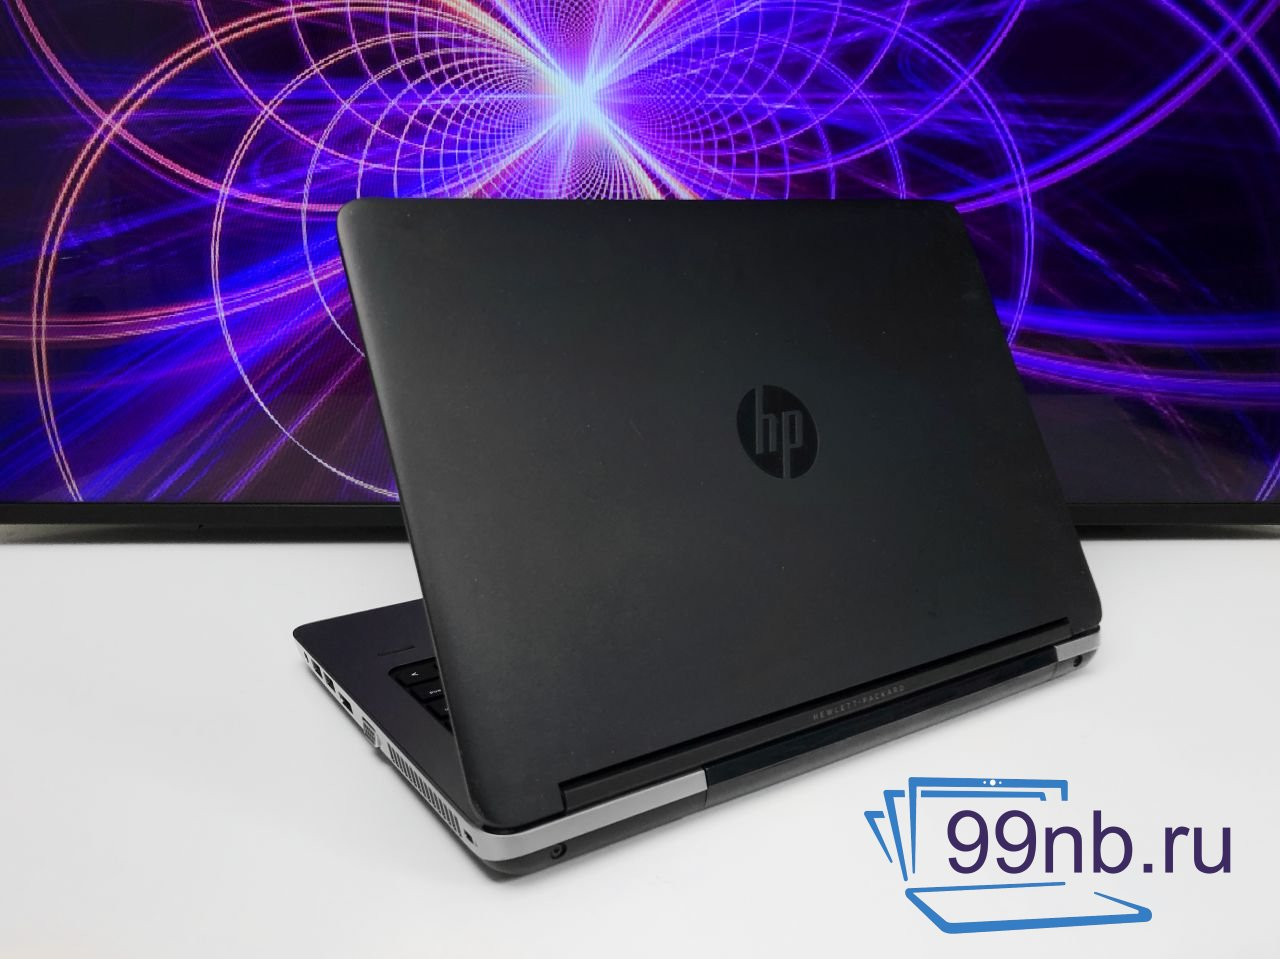  HP Probook в металле с гарантией